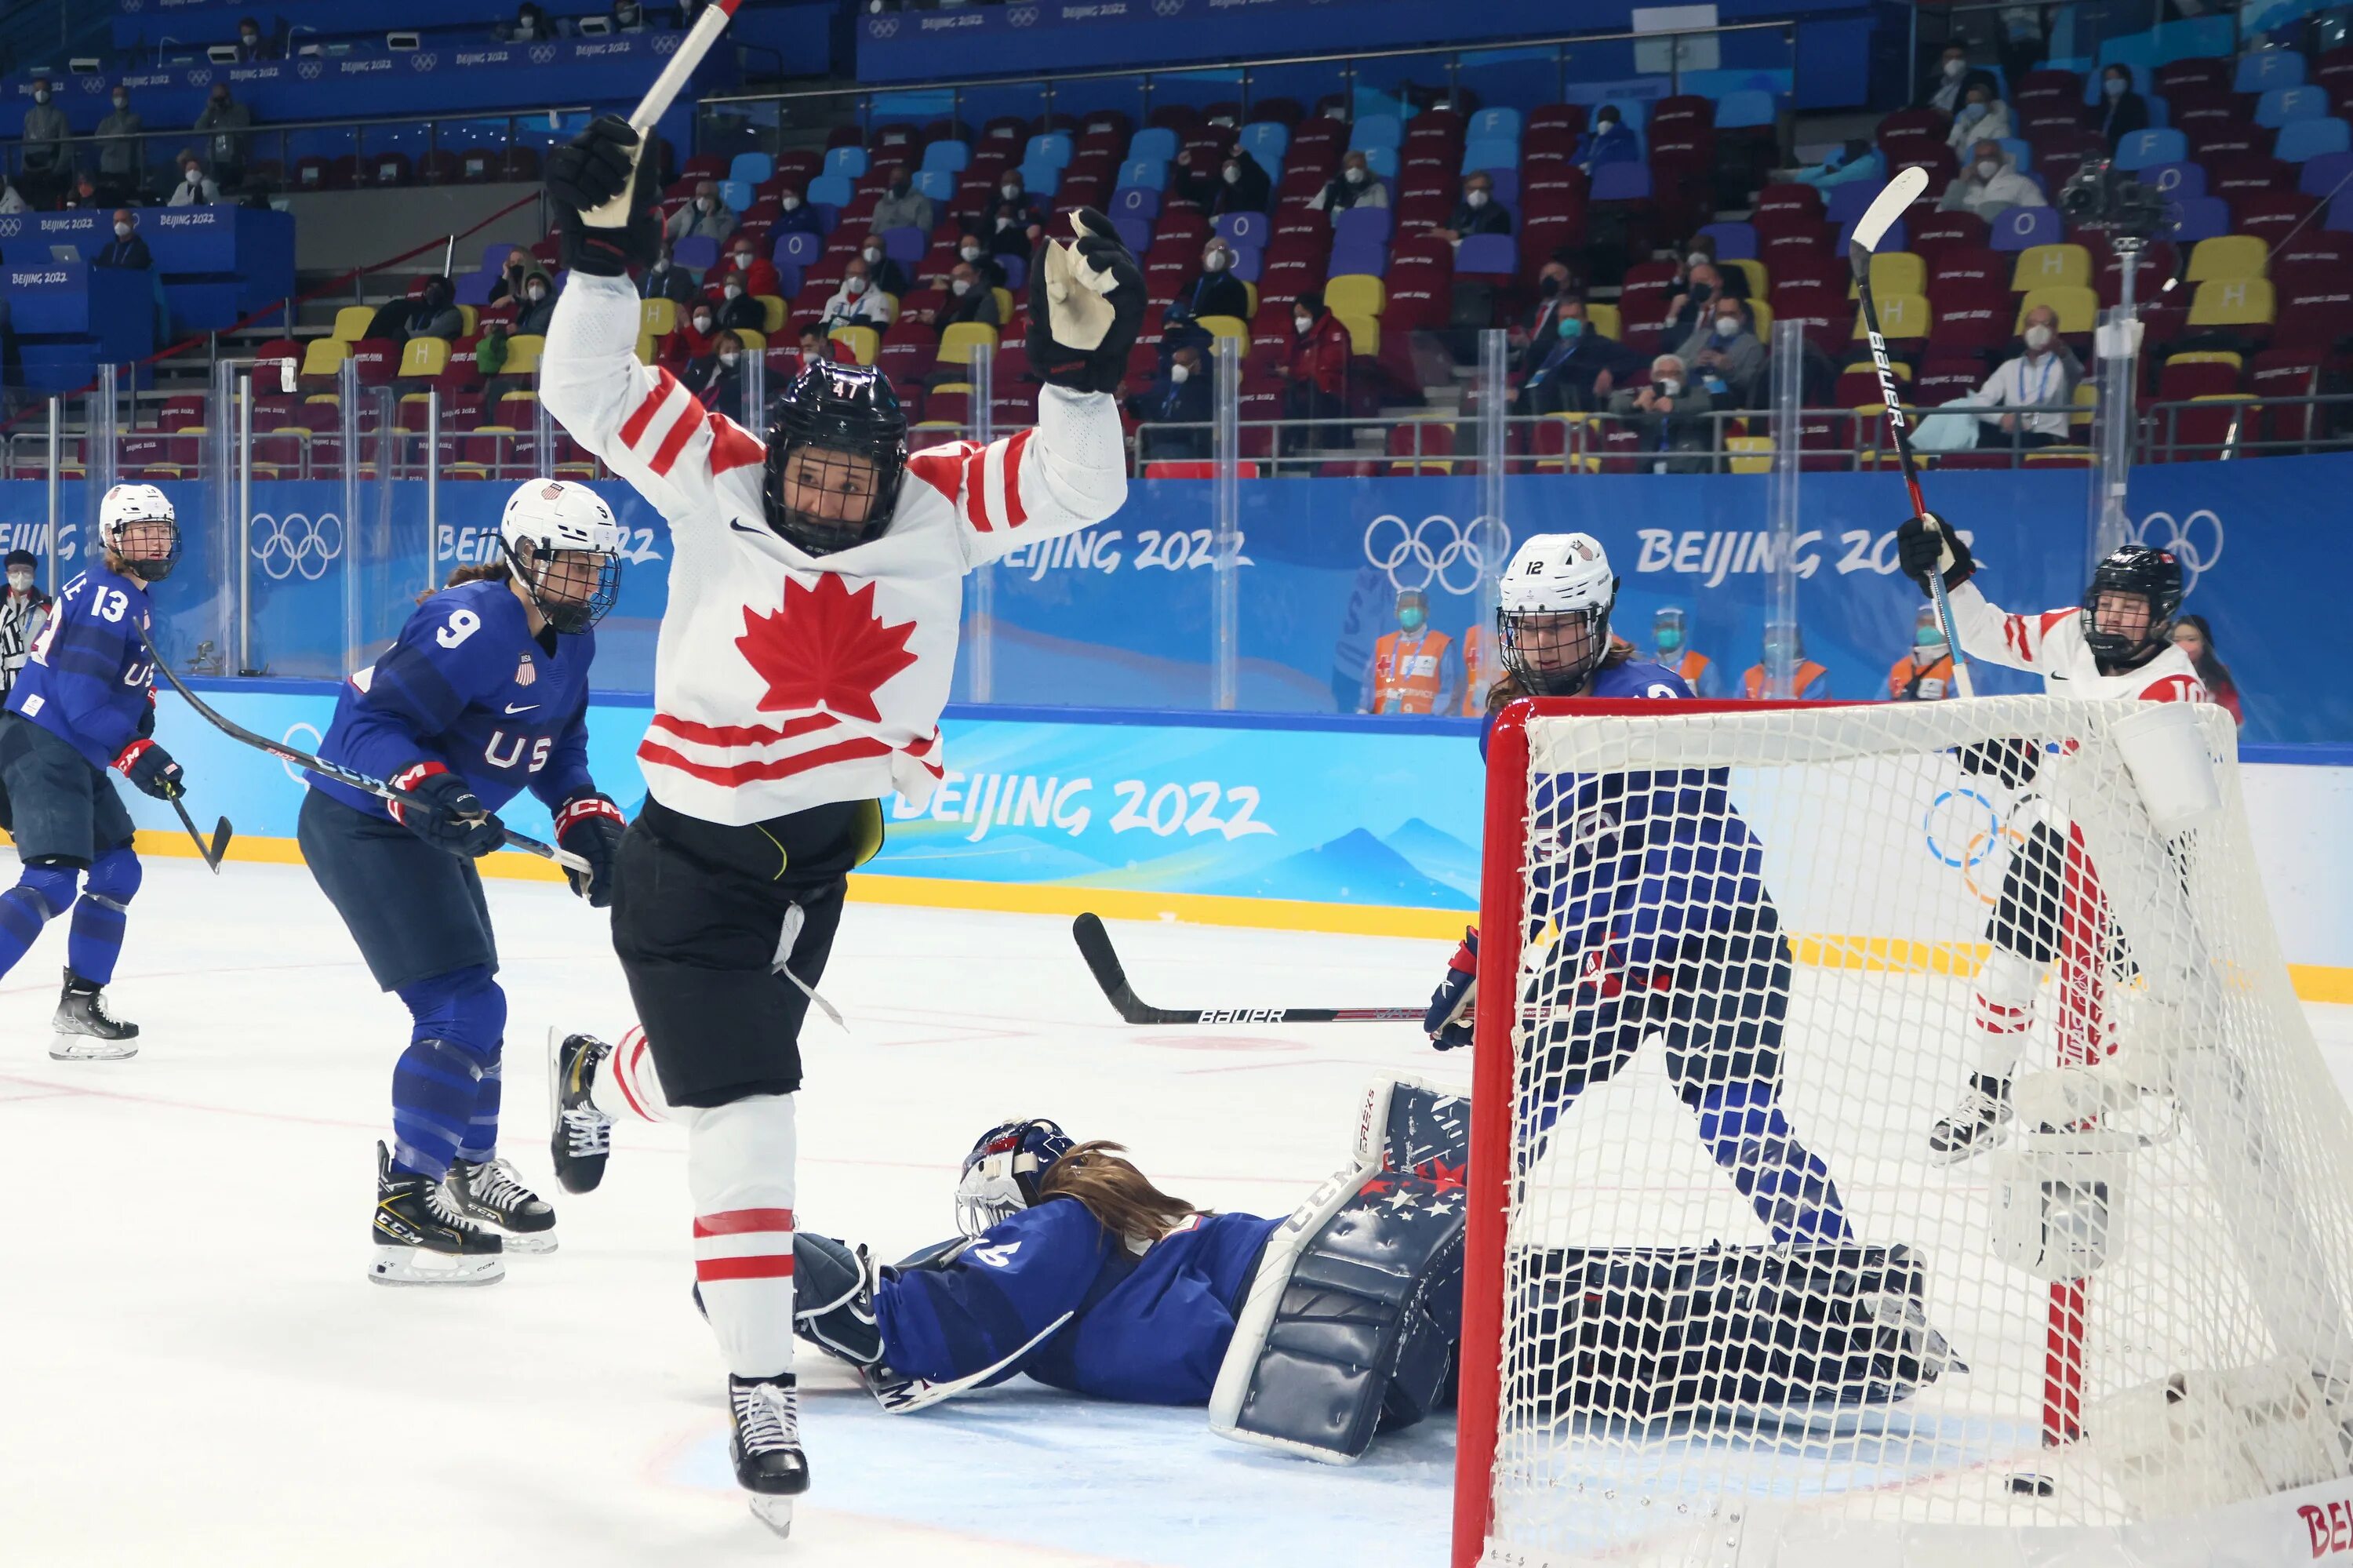 Canada Hockey Team 2022. Хоккейный турнир на Олимпиаде 2022. Олимпийский хоккейный турнир 2022 Пекин. Хоккейный турнир 2022 Пекин. Свежие новости хоккея на сегодня